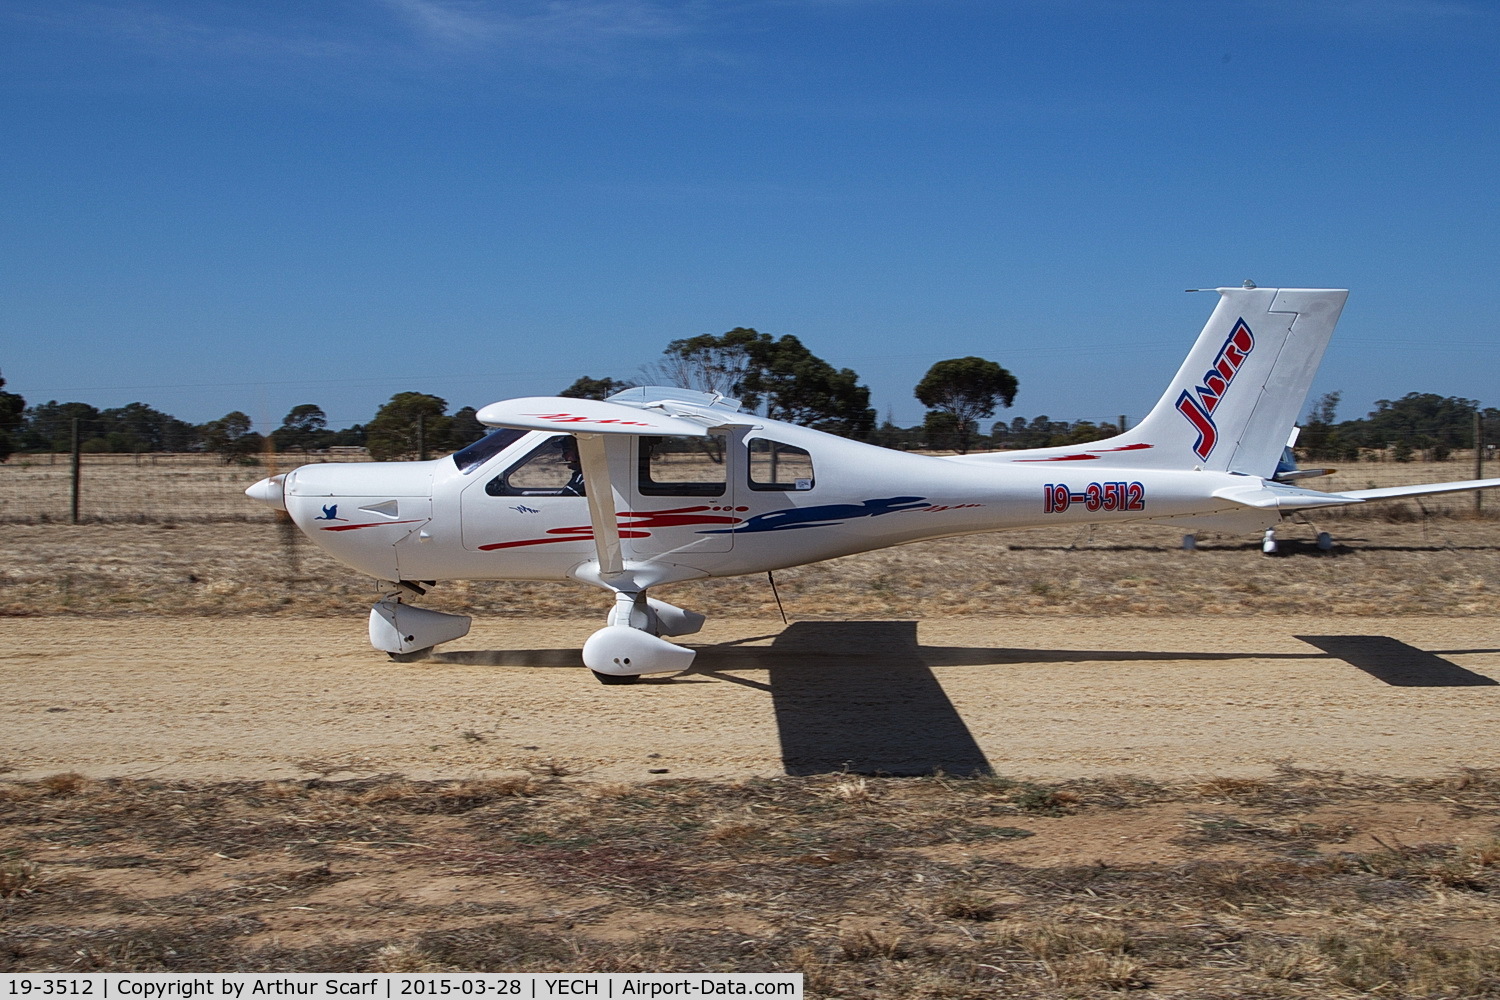 19-3512, 2001 Jabiru J200 C/N J0001, 19-3512 at the AAAA fly in Echuca 2015